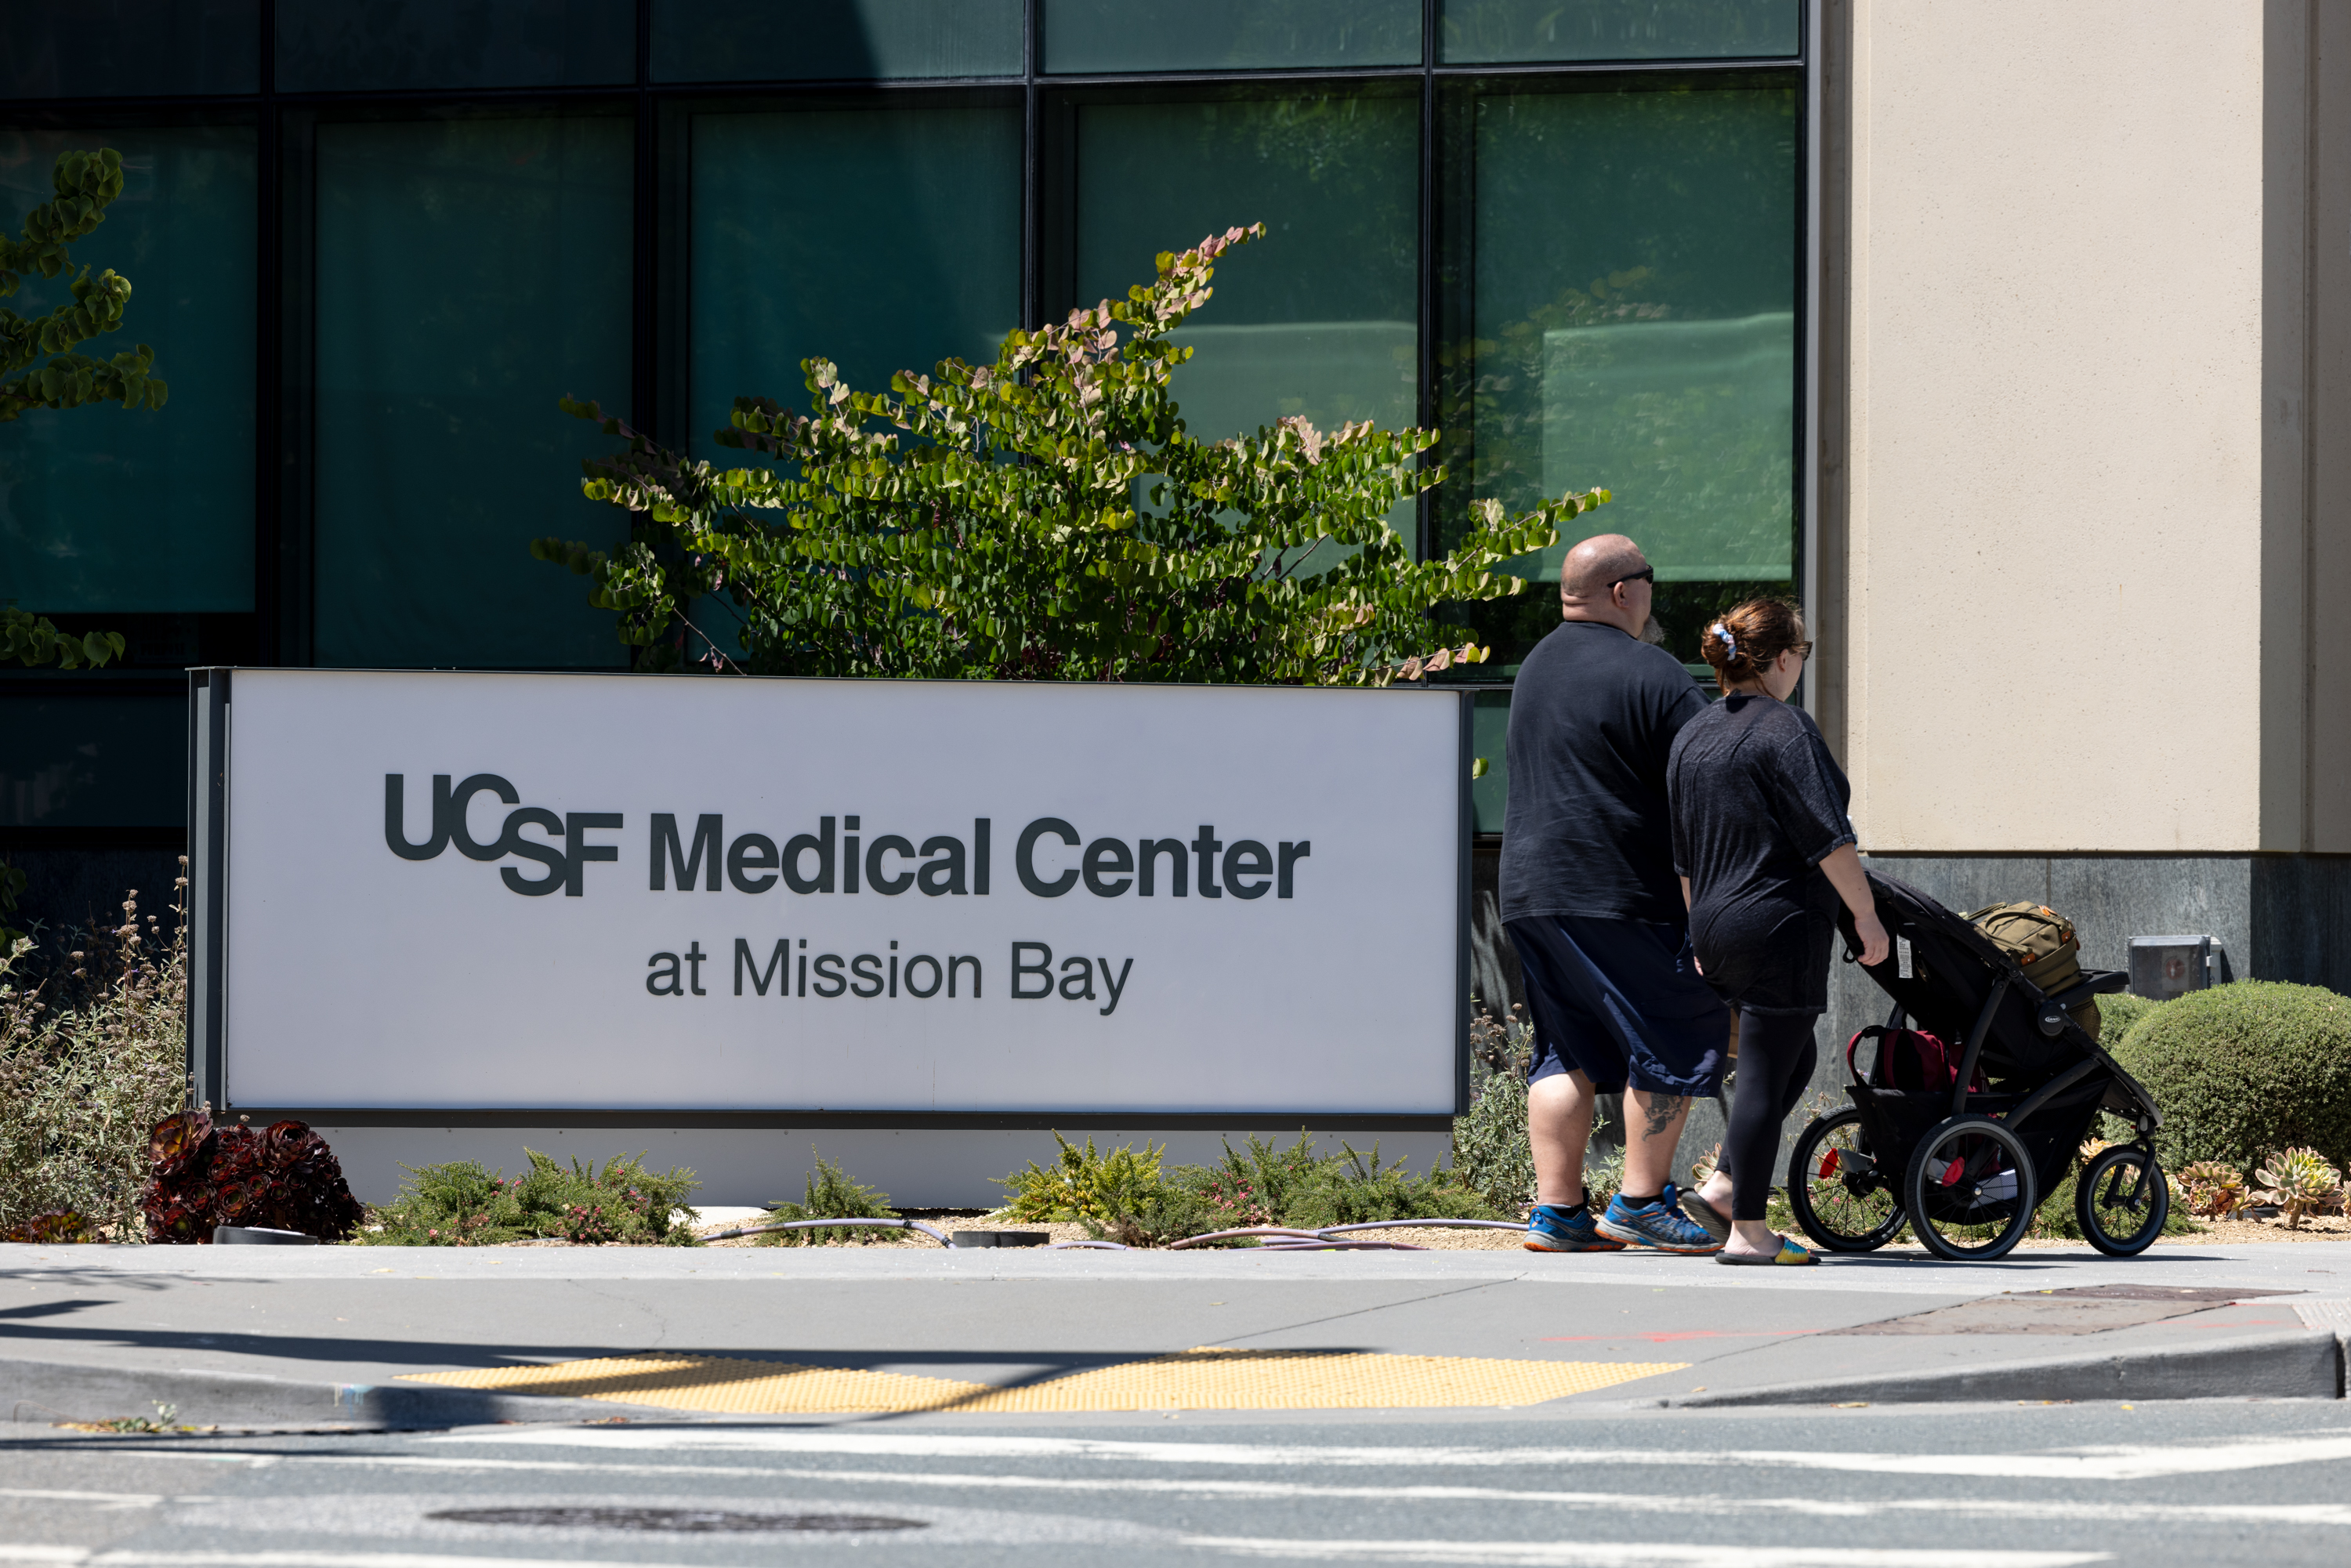 Man and woman walk down sidewalk with stroller outside hospital building